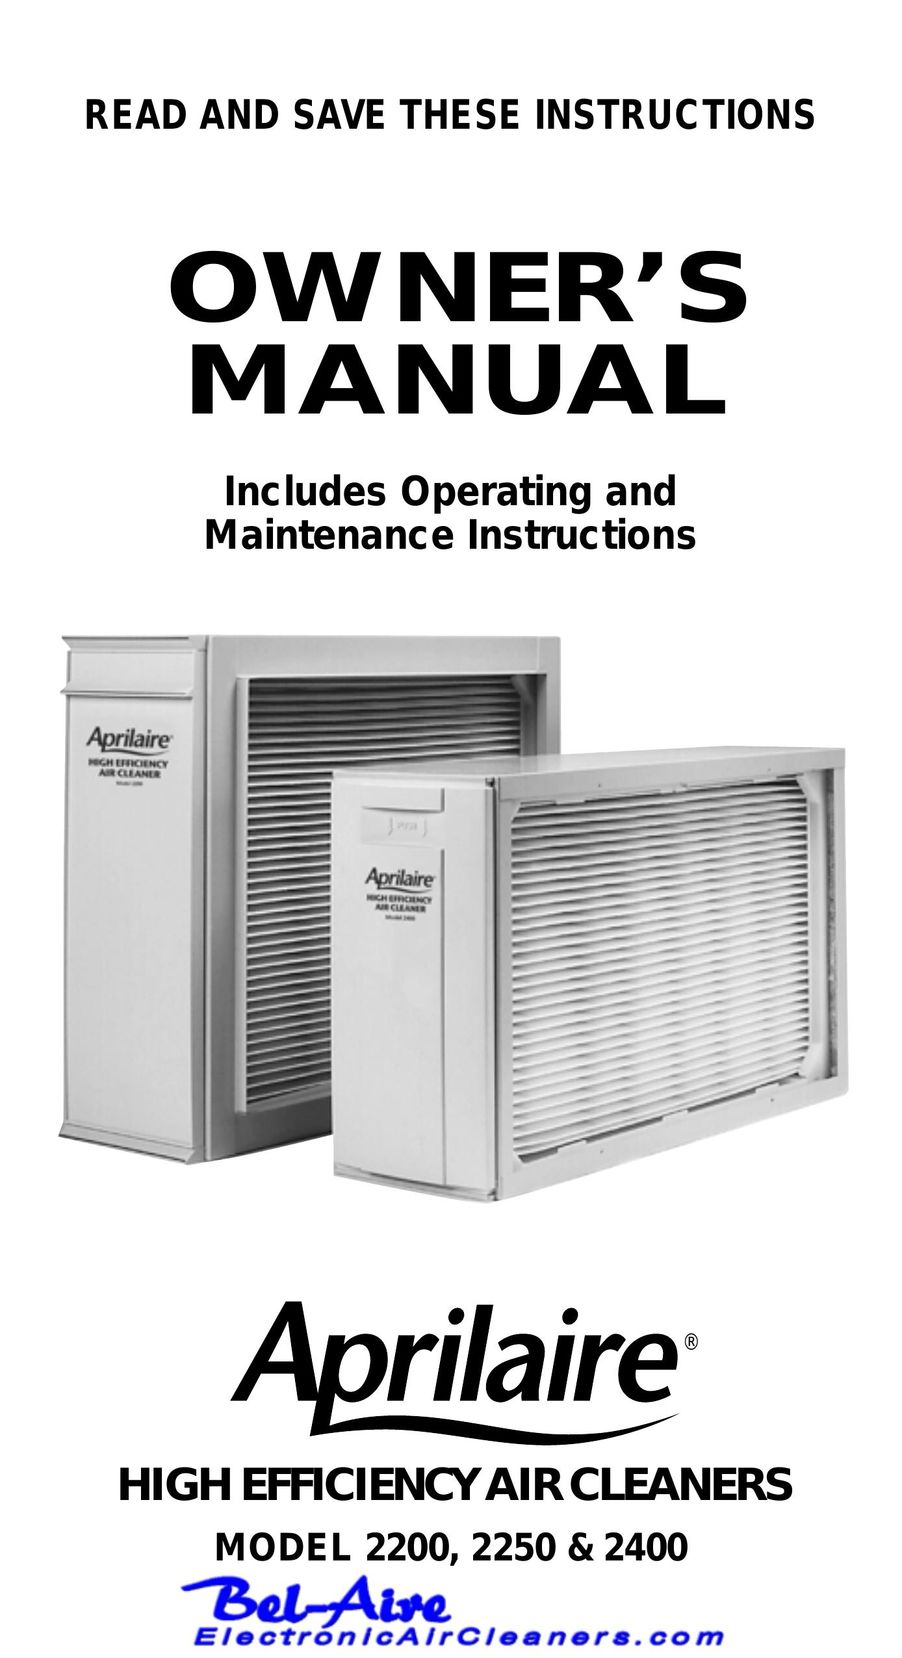 Aprilaire 2250 & 2400 Air Cleaner User Manual